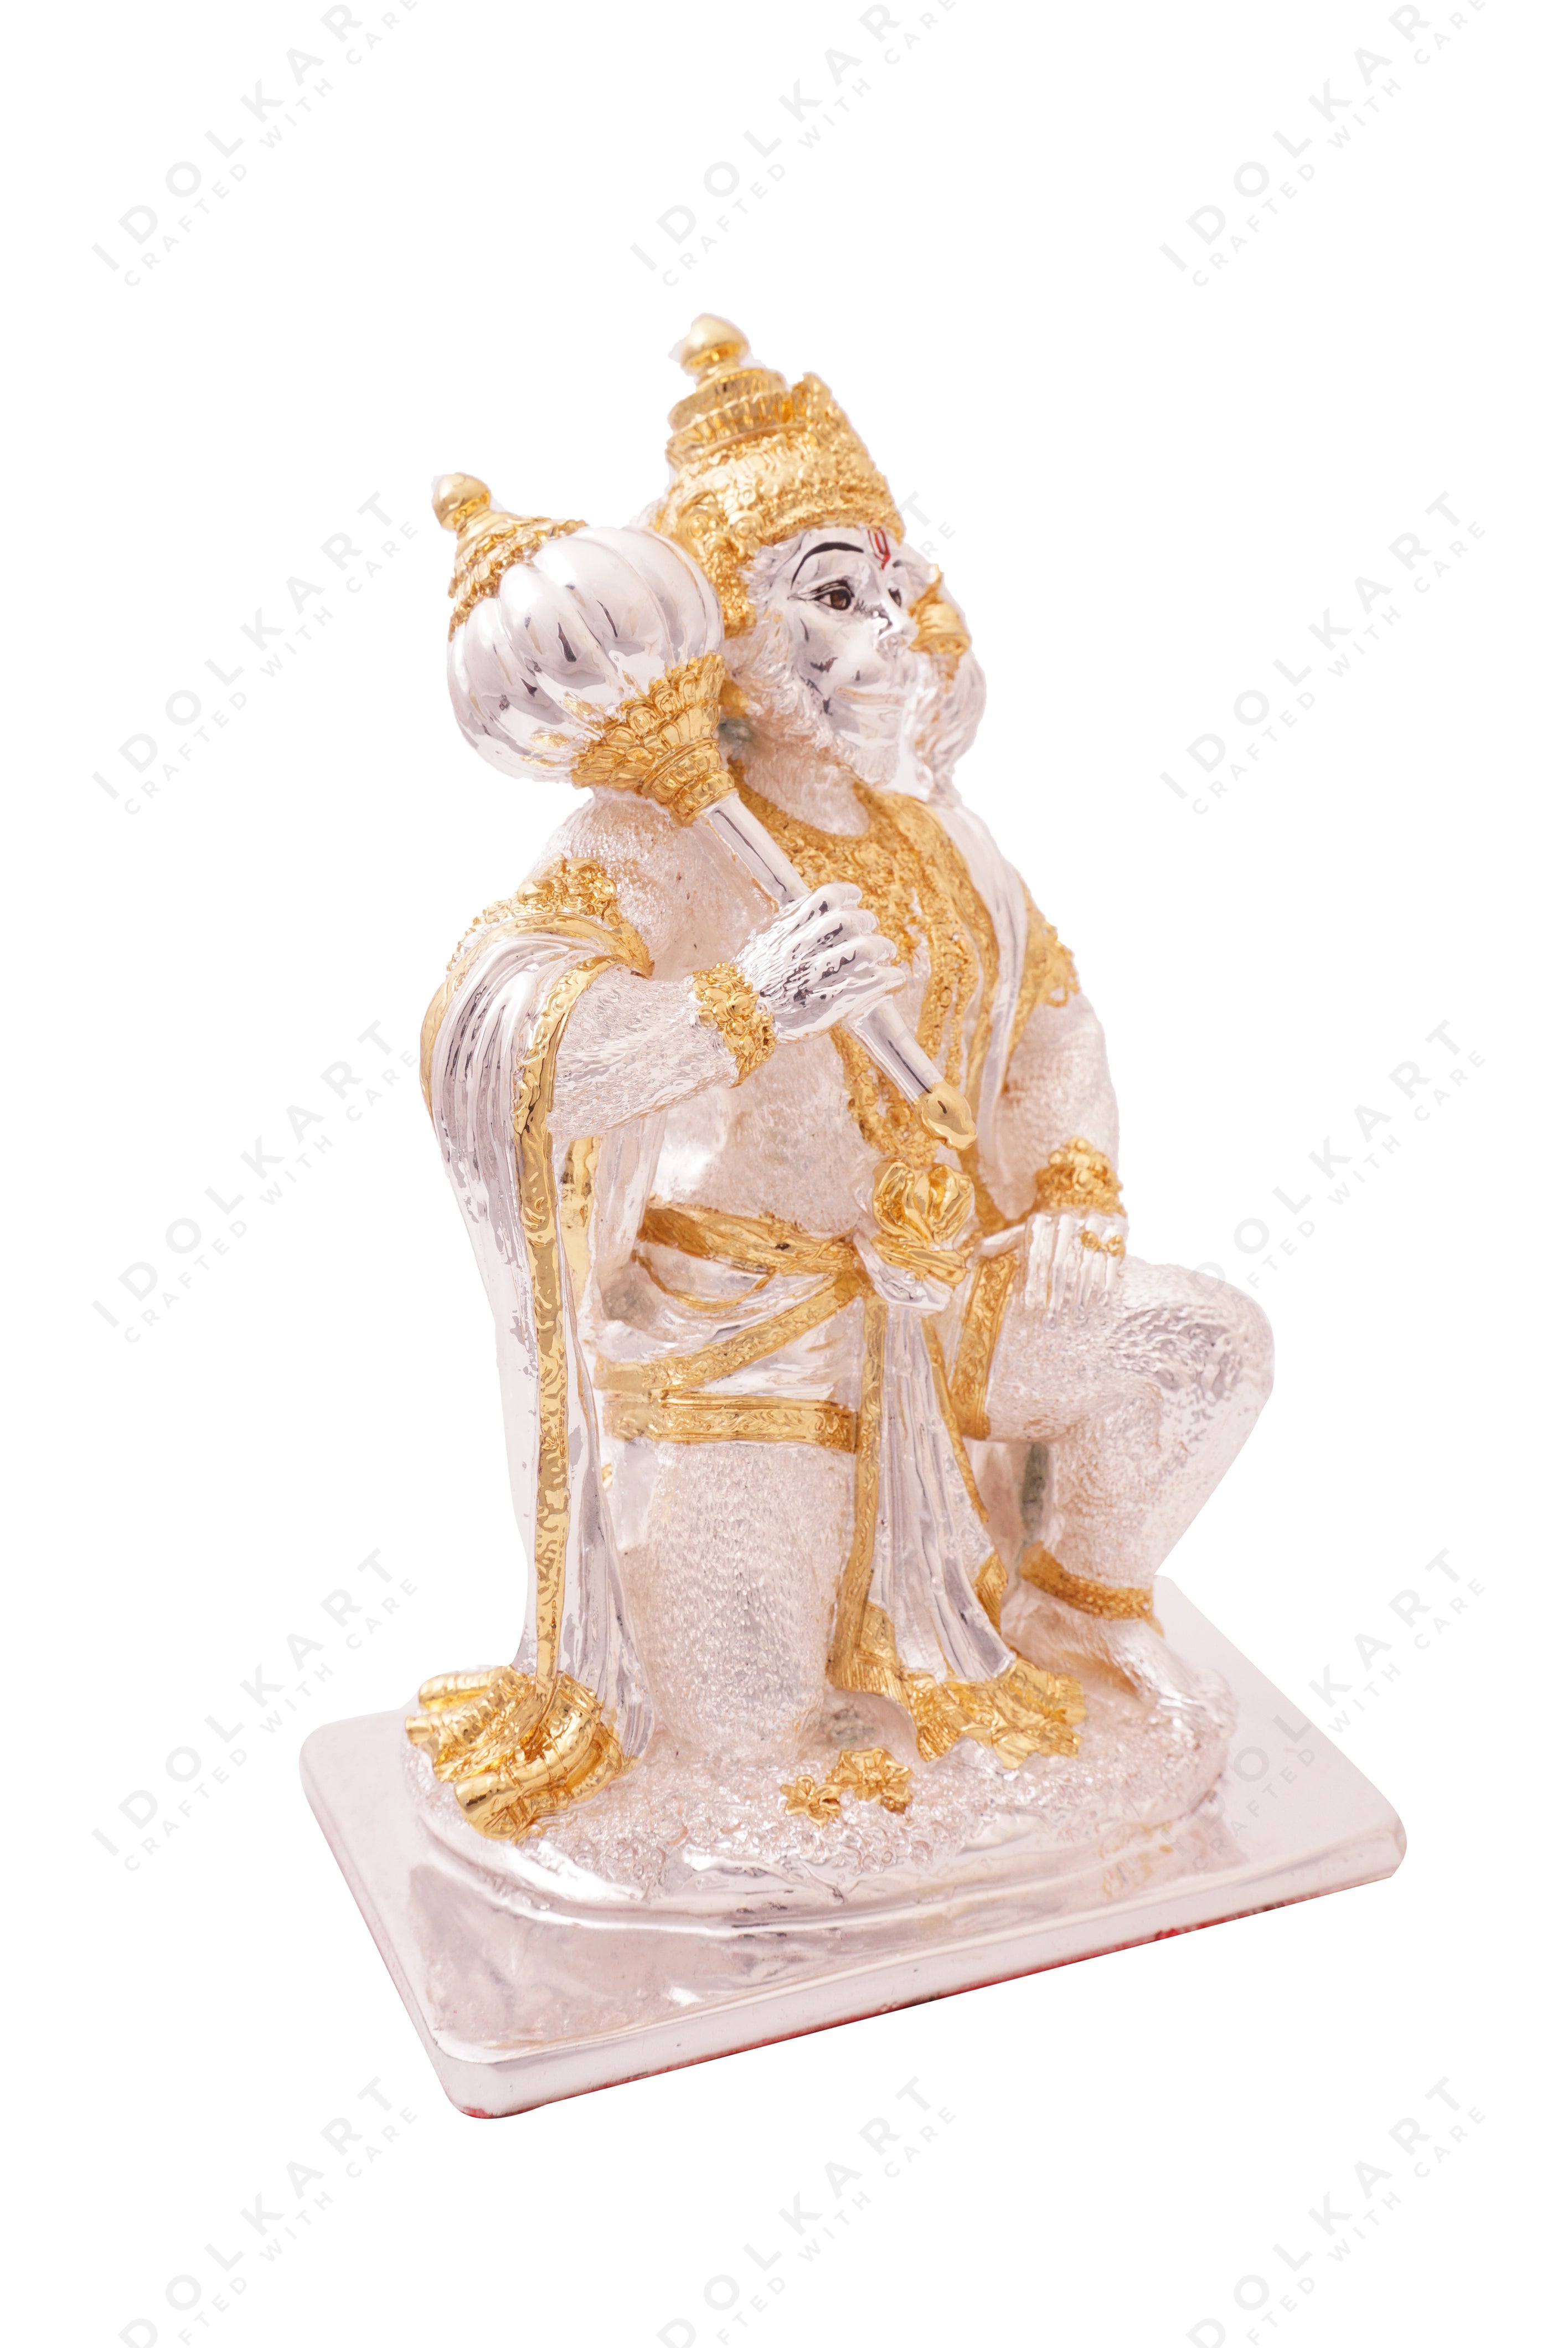 8 inch Pure Gold and Silver coated Hanuman Idol for Home Decor | Bajrangbali Murti for Mandir | Sitting Hanuman Murti with Hanuman Gada for Home Decor Office | Bajranbali Murti | Pure Gold Gifts for Diwali, House Warming, Wedding Gift